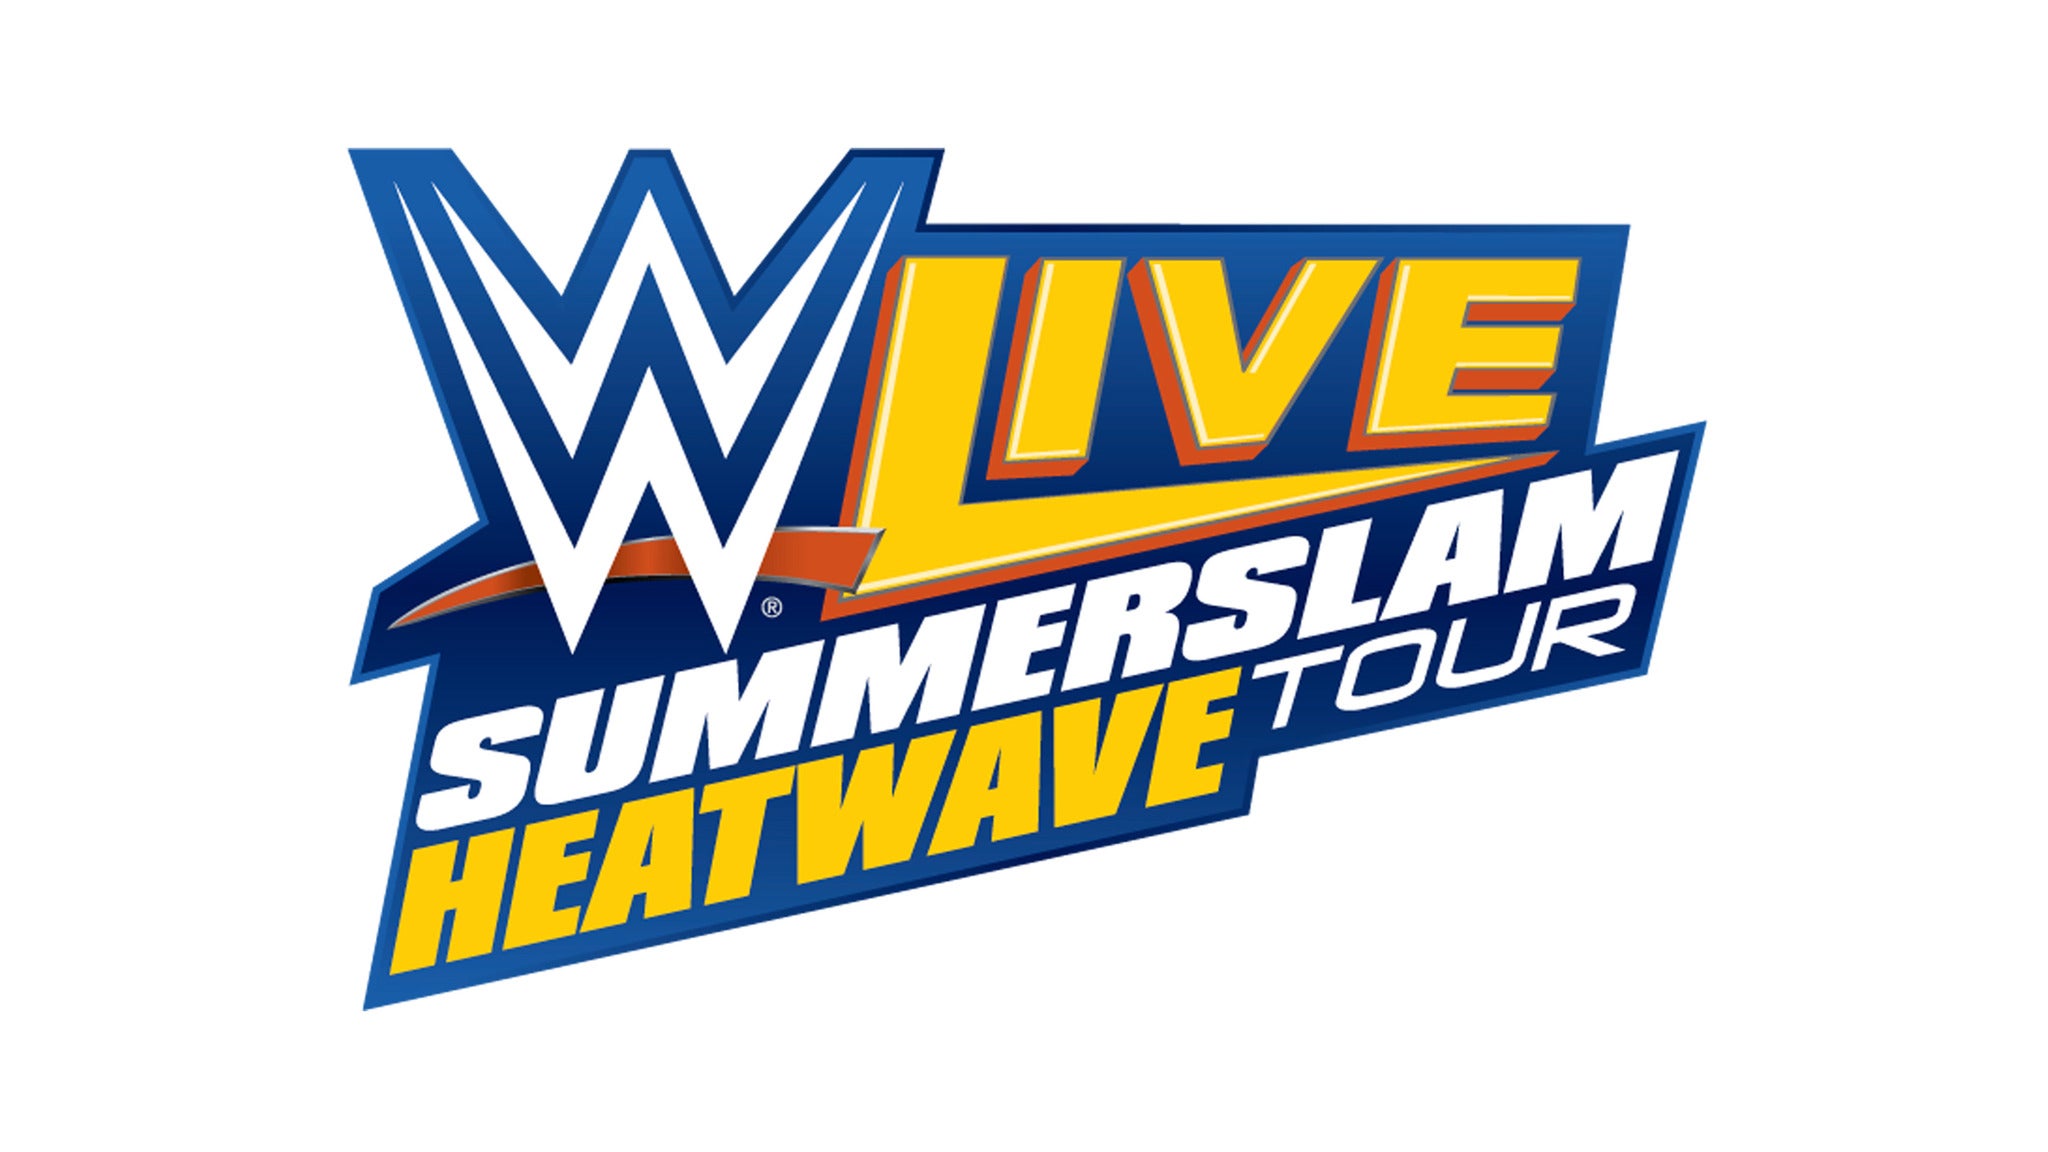 WWE Live SummerSlam Heatwave Tour Tickets Single Game Tickets